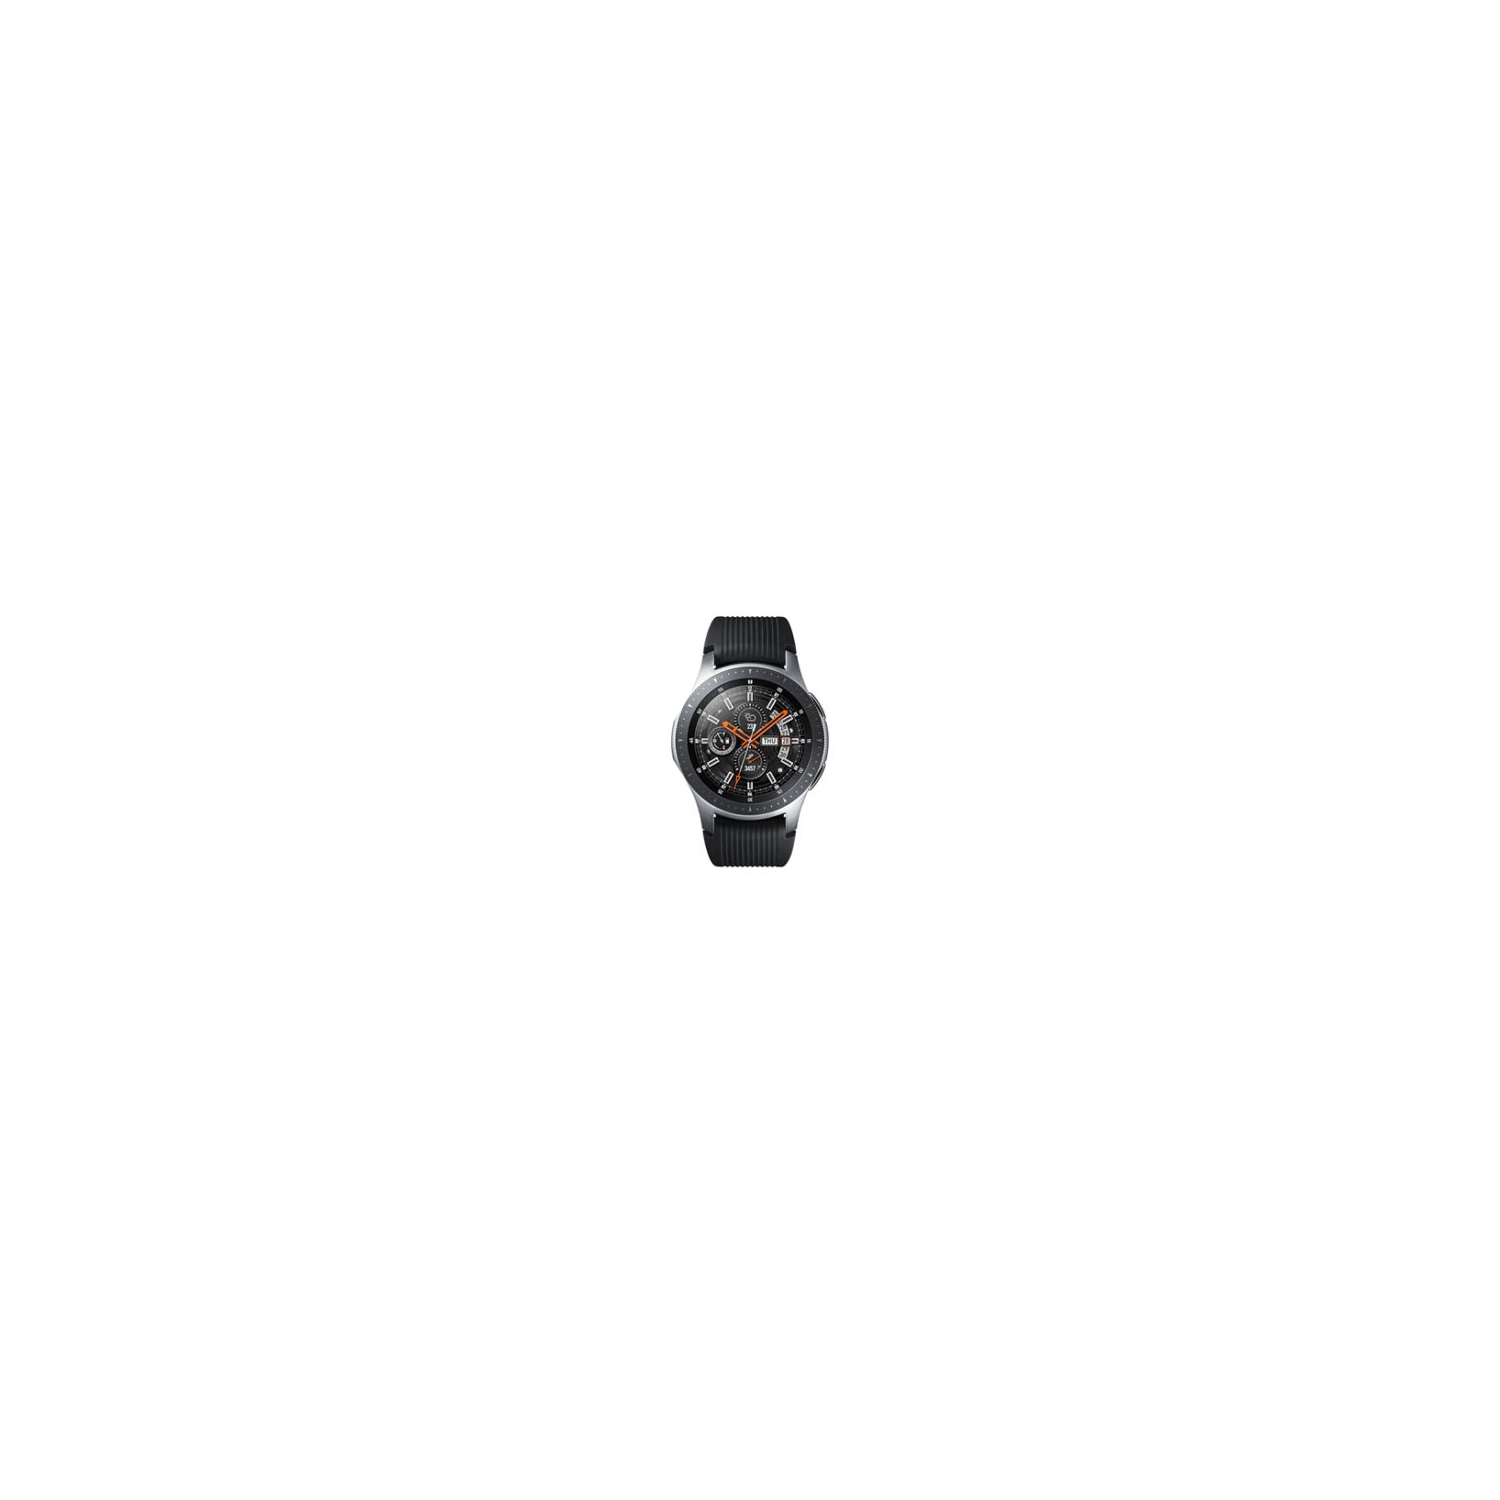 Samsung Galaxy Watch R800 Bluetooth Version (46mm, Silver) - Brand New